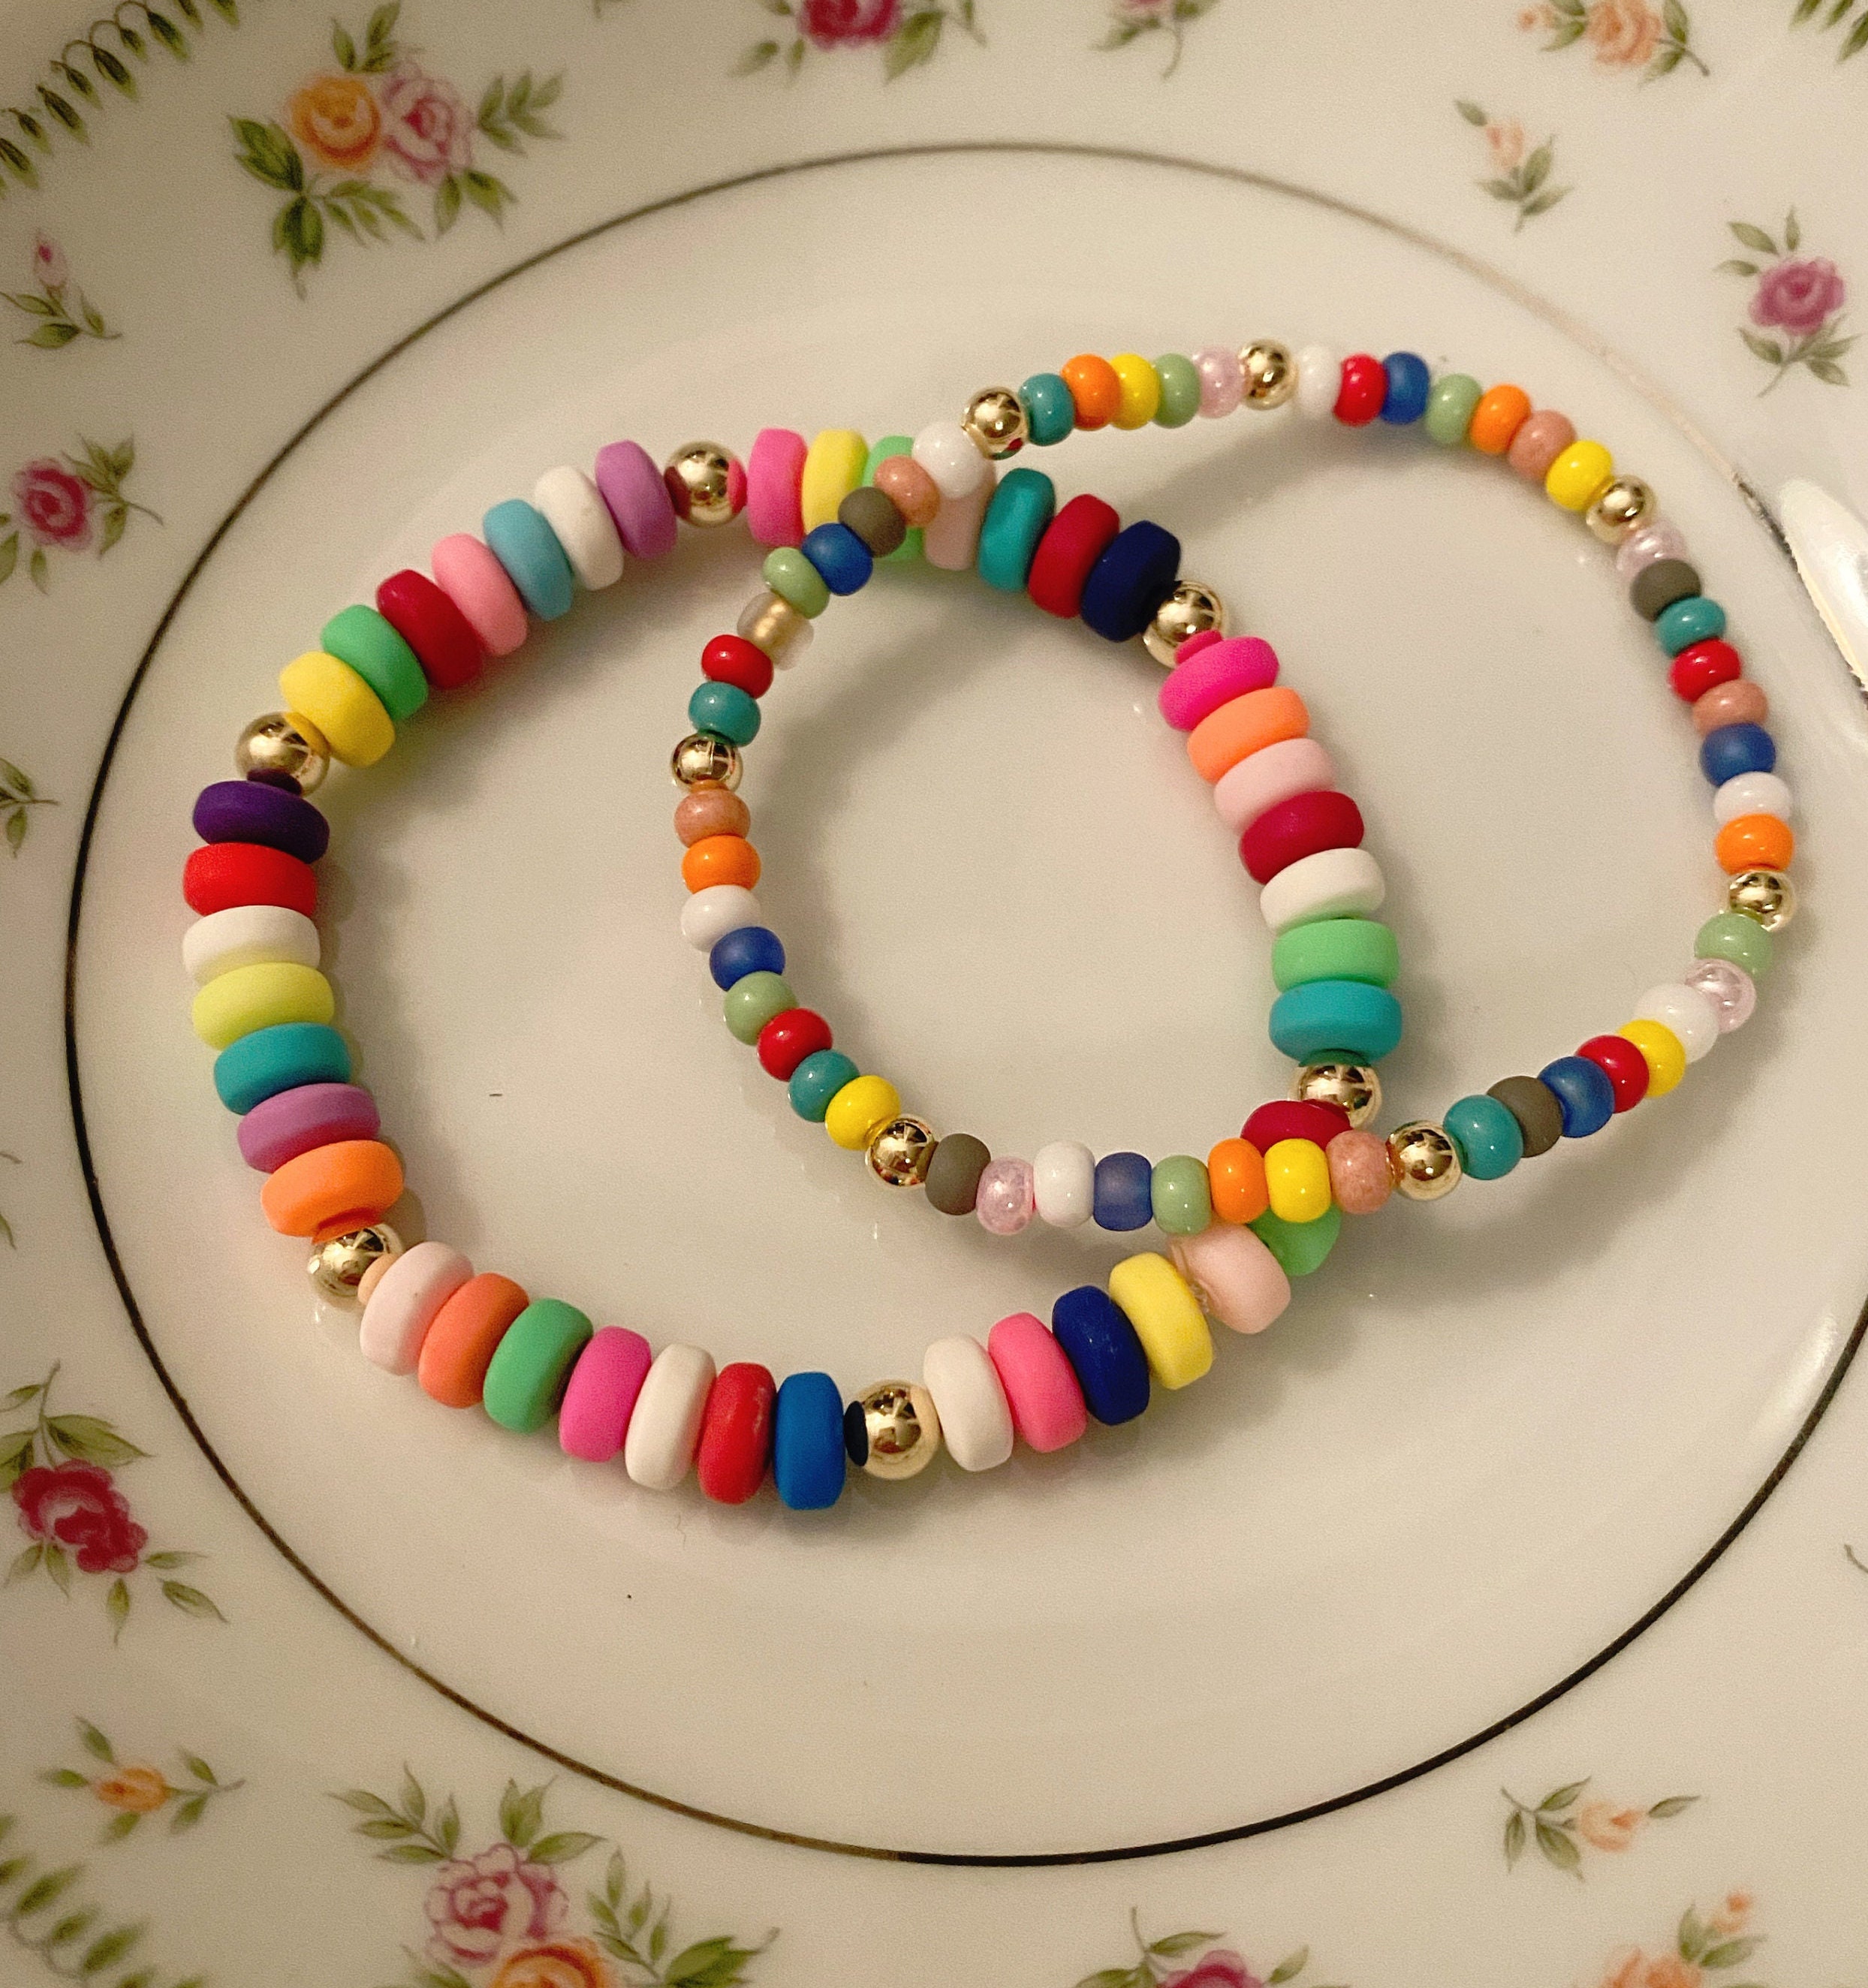 Ties That Bind Mini Bracelet | An Inspirational Family Bracelet